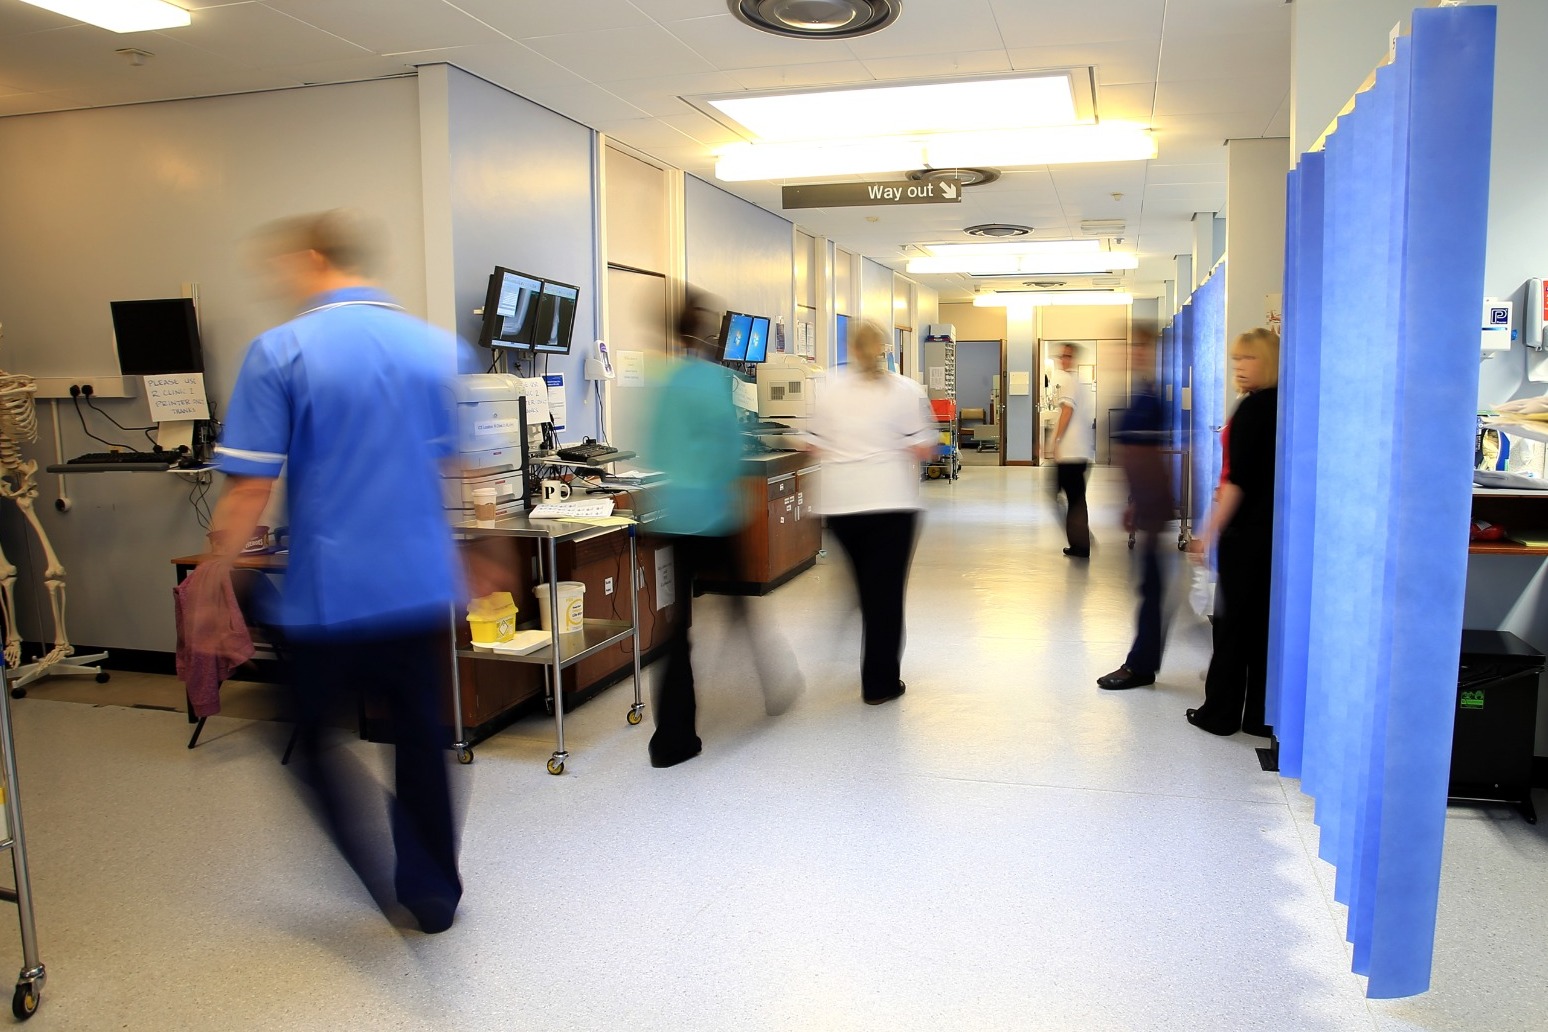 NHS staff need proper pay rise, union warns 